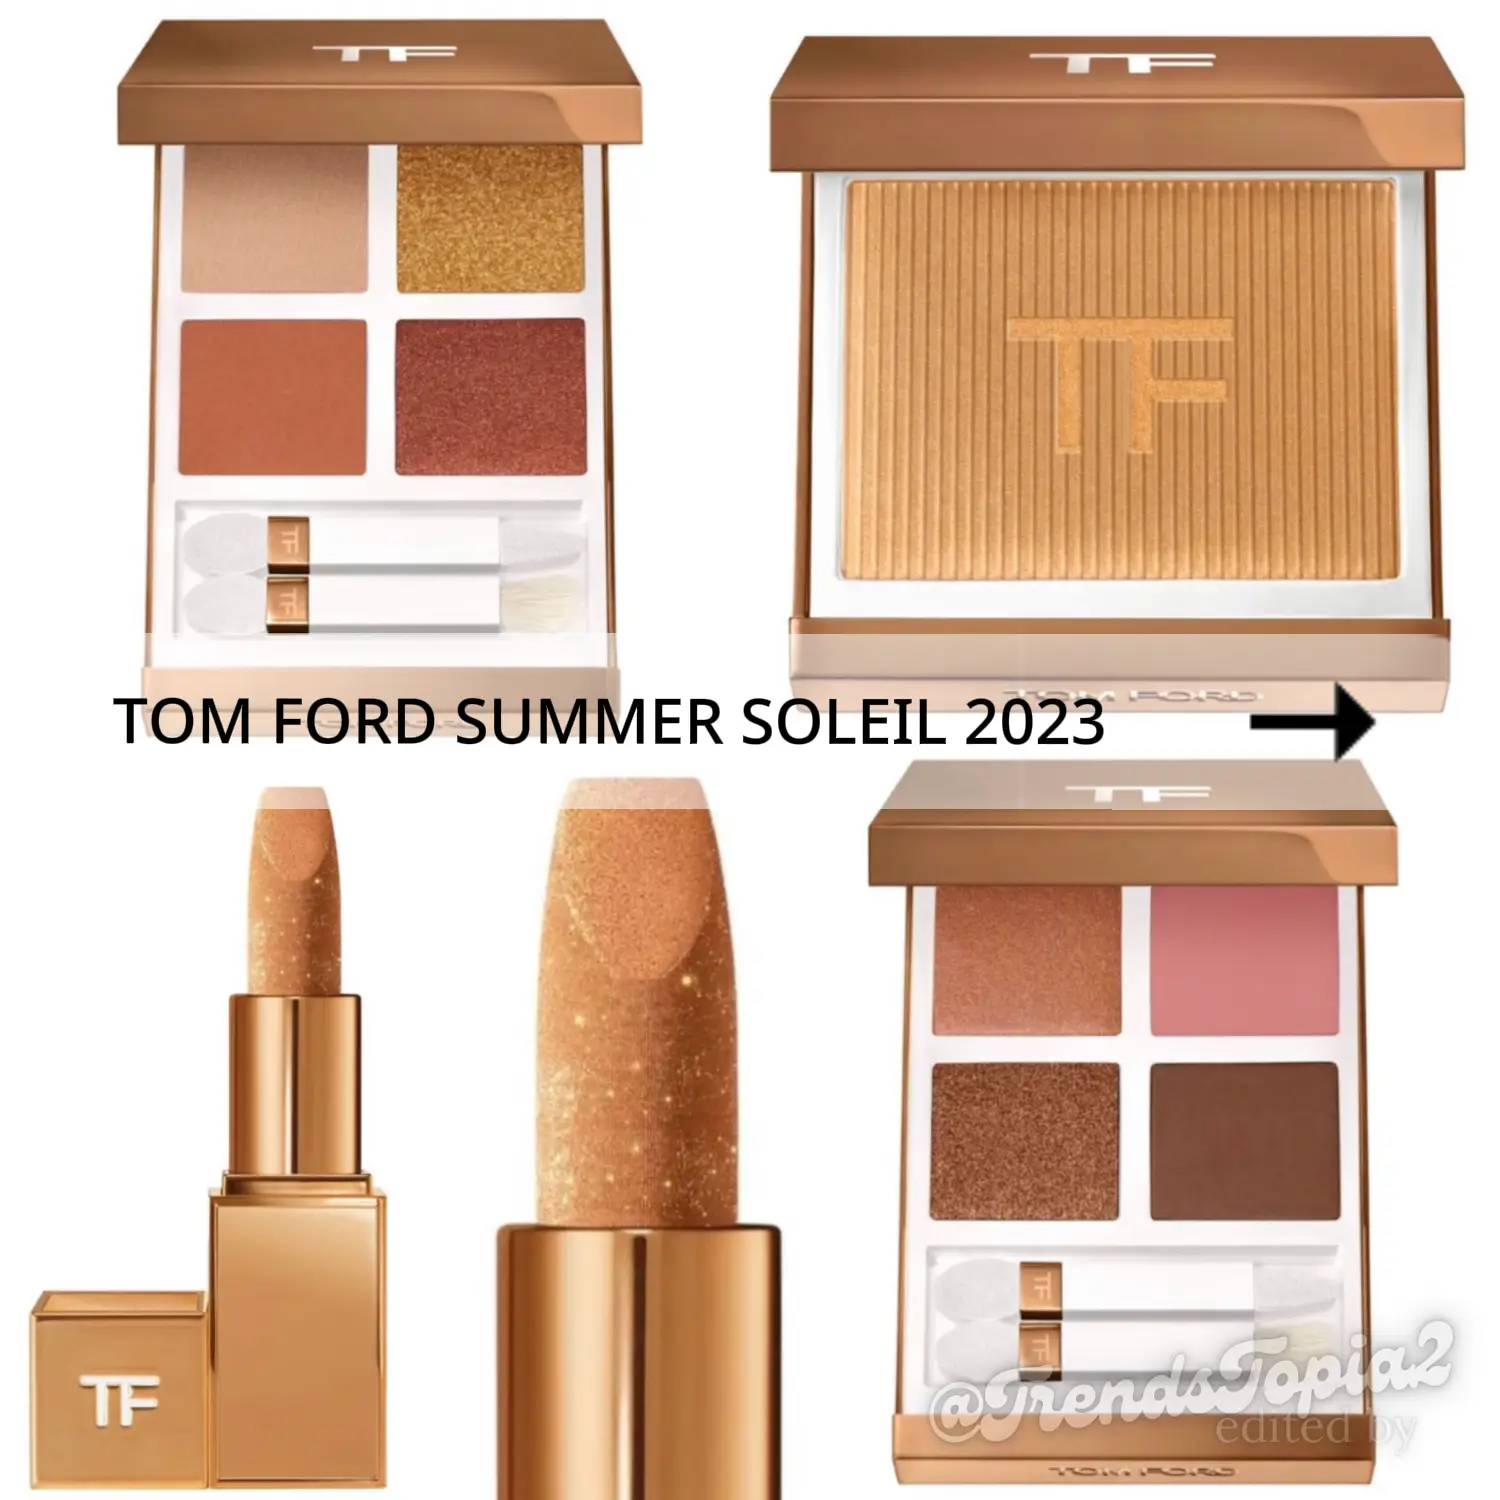 NEW TOM FORD Soleil Summer 2023, Product Updates, Lipstick Saga Finale 😂